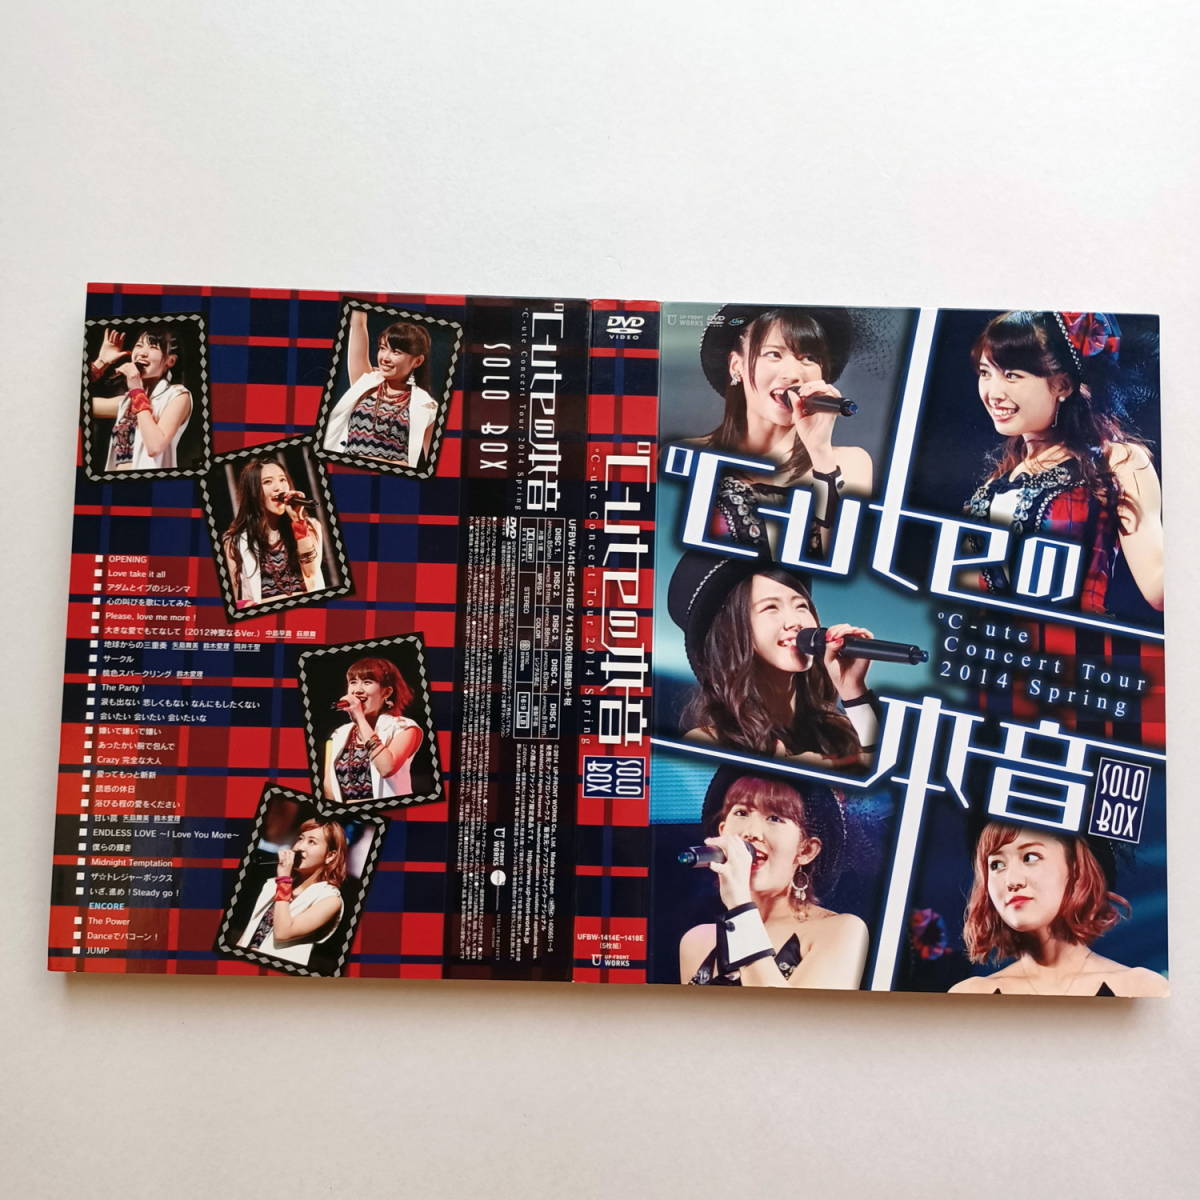 ℃-uteの本音/ ℃-ute Concert Tour 2014 Spring SOLO DVD BOX/ソロ DVD